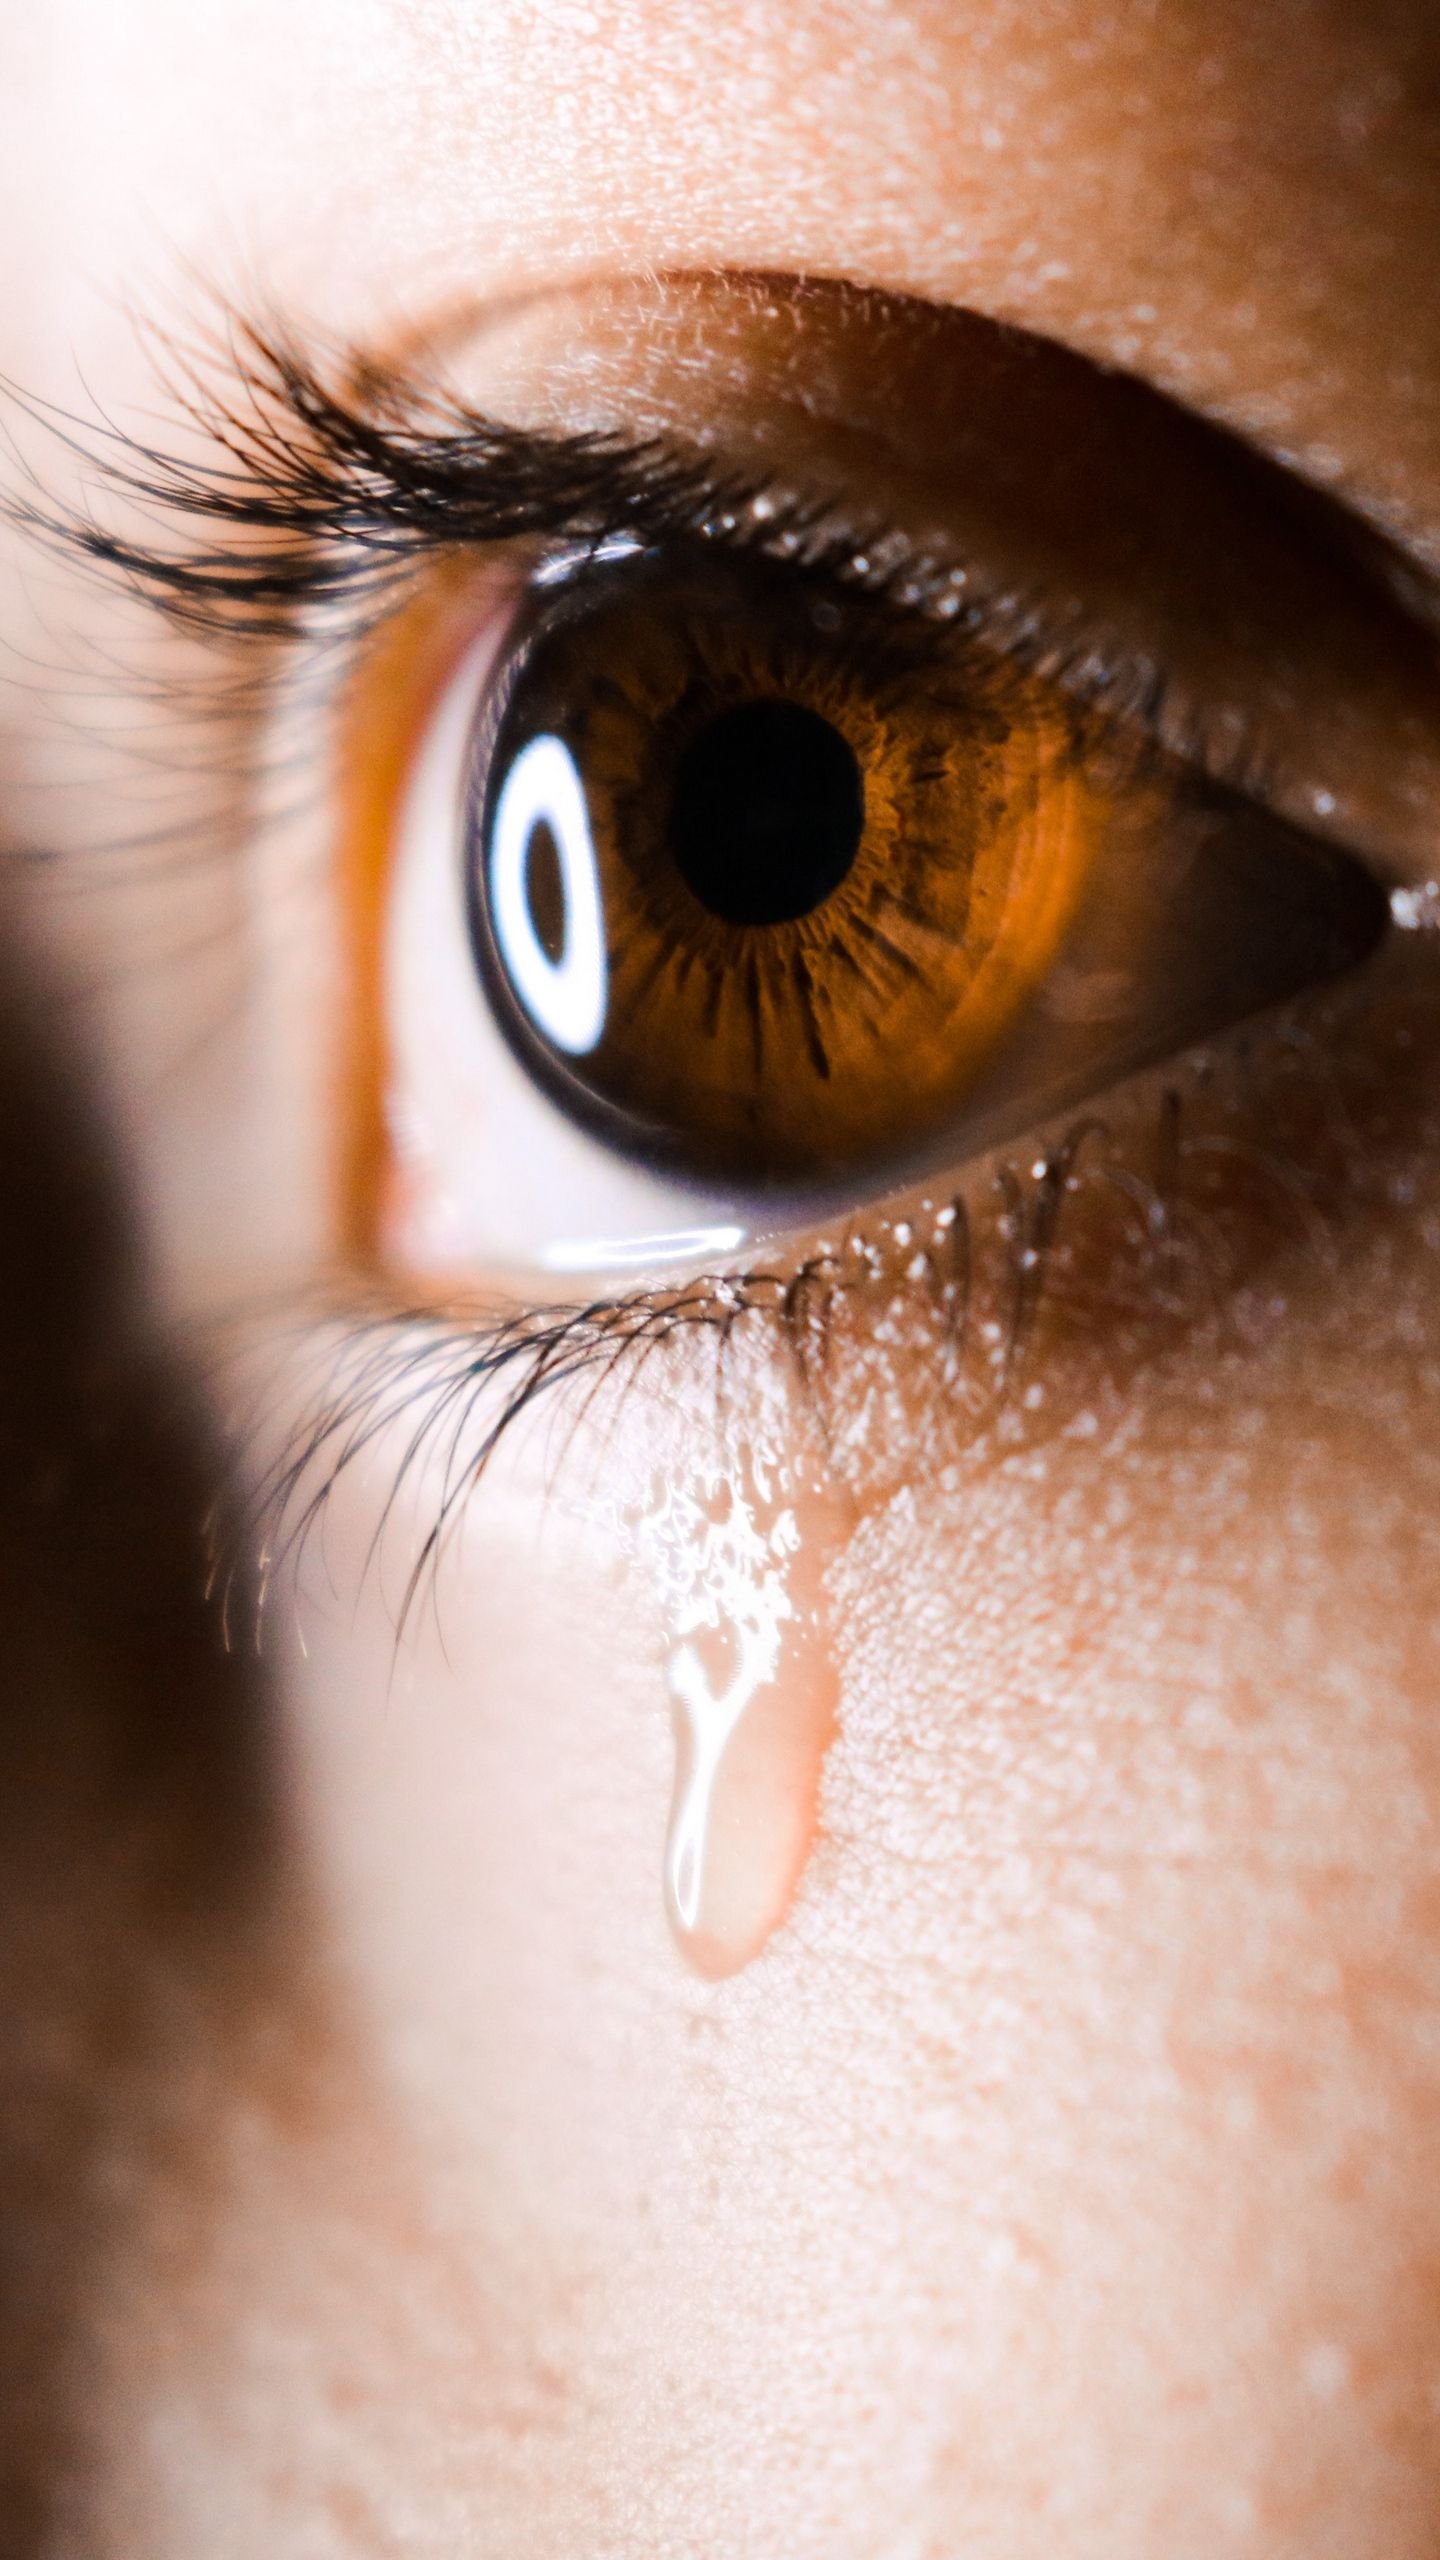 Tearful eye